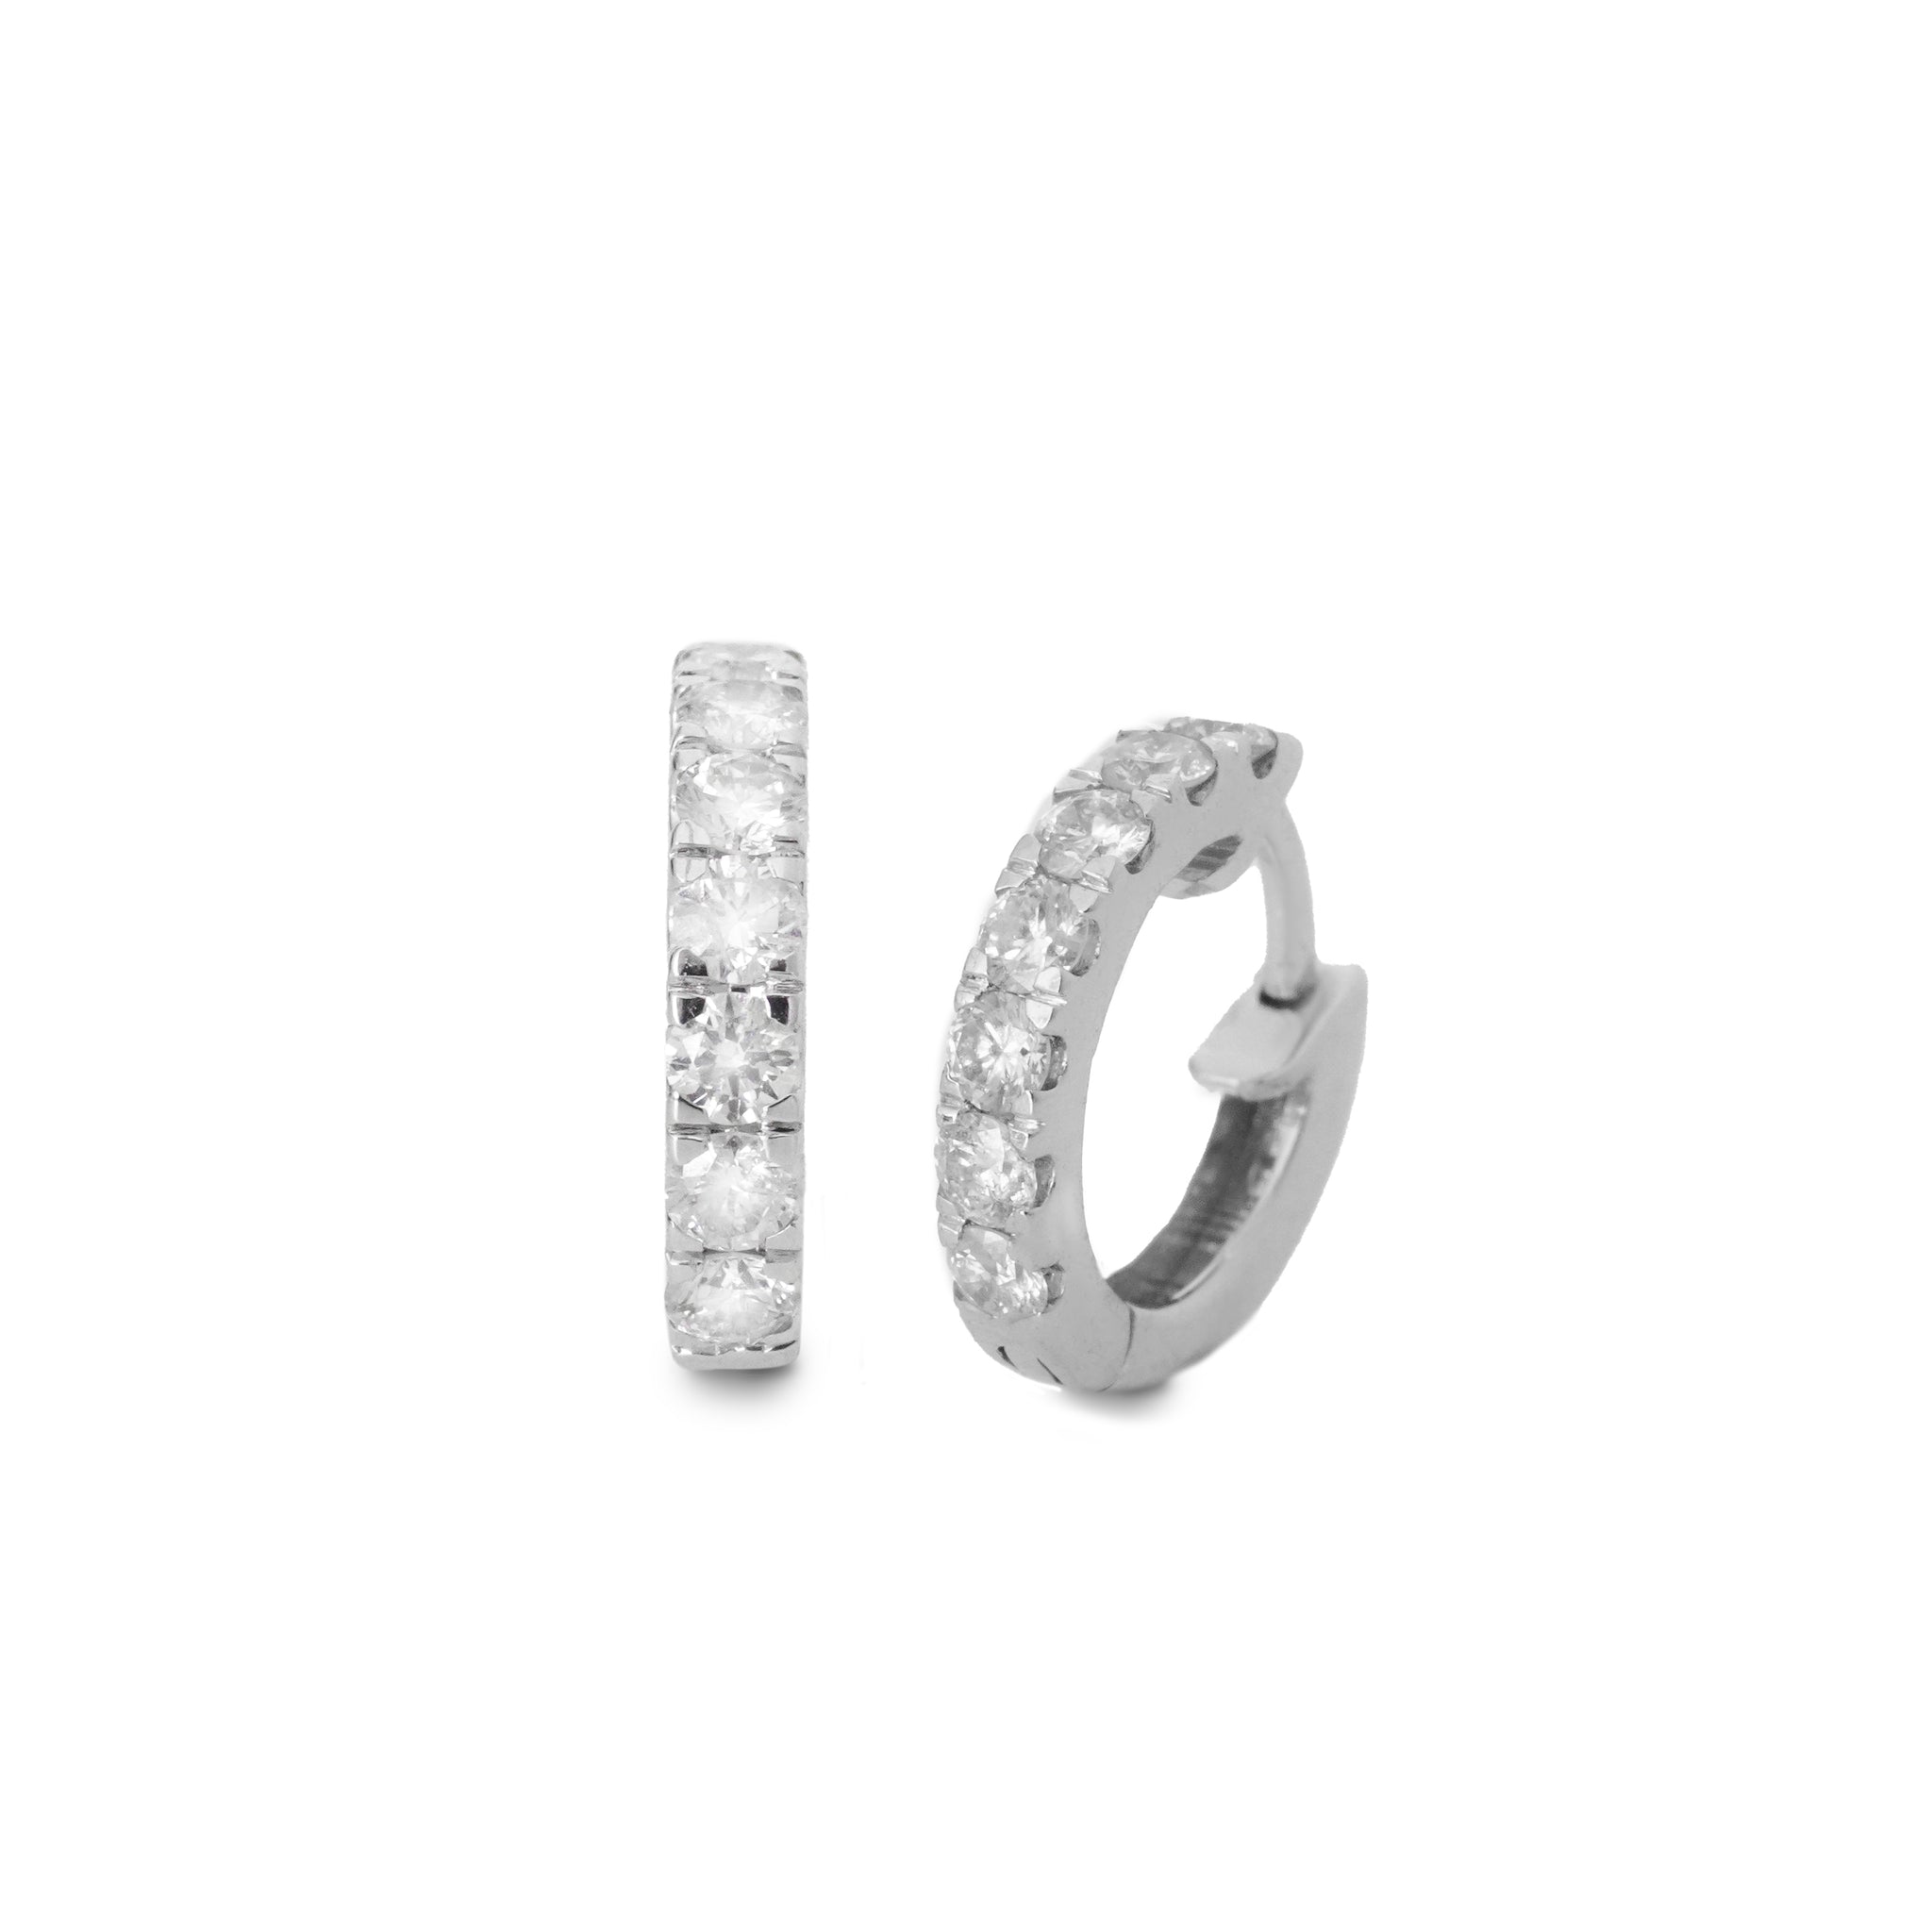 Bling Diamond Earrings (Pair)